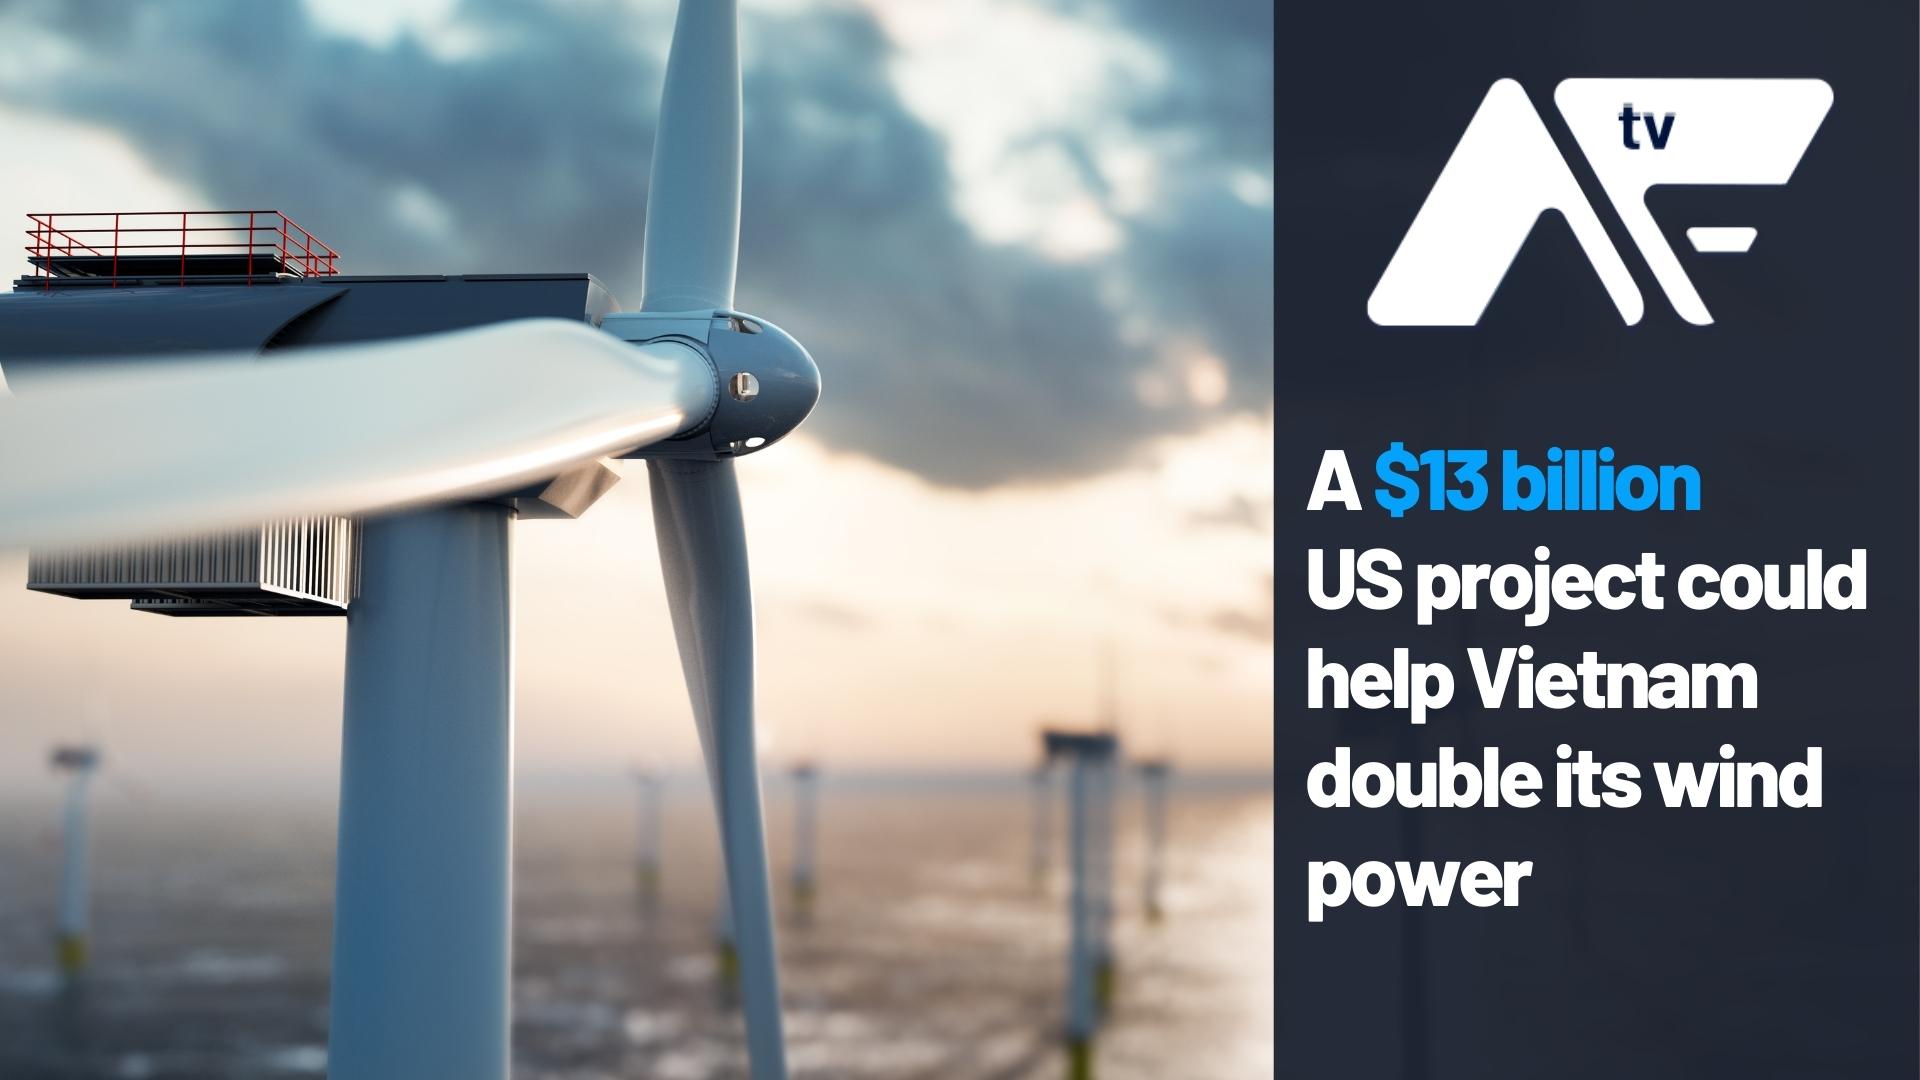 AF TV – A $13 billion US project could help Vietnam double its wind power